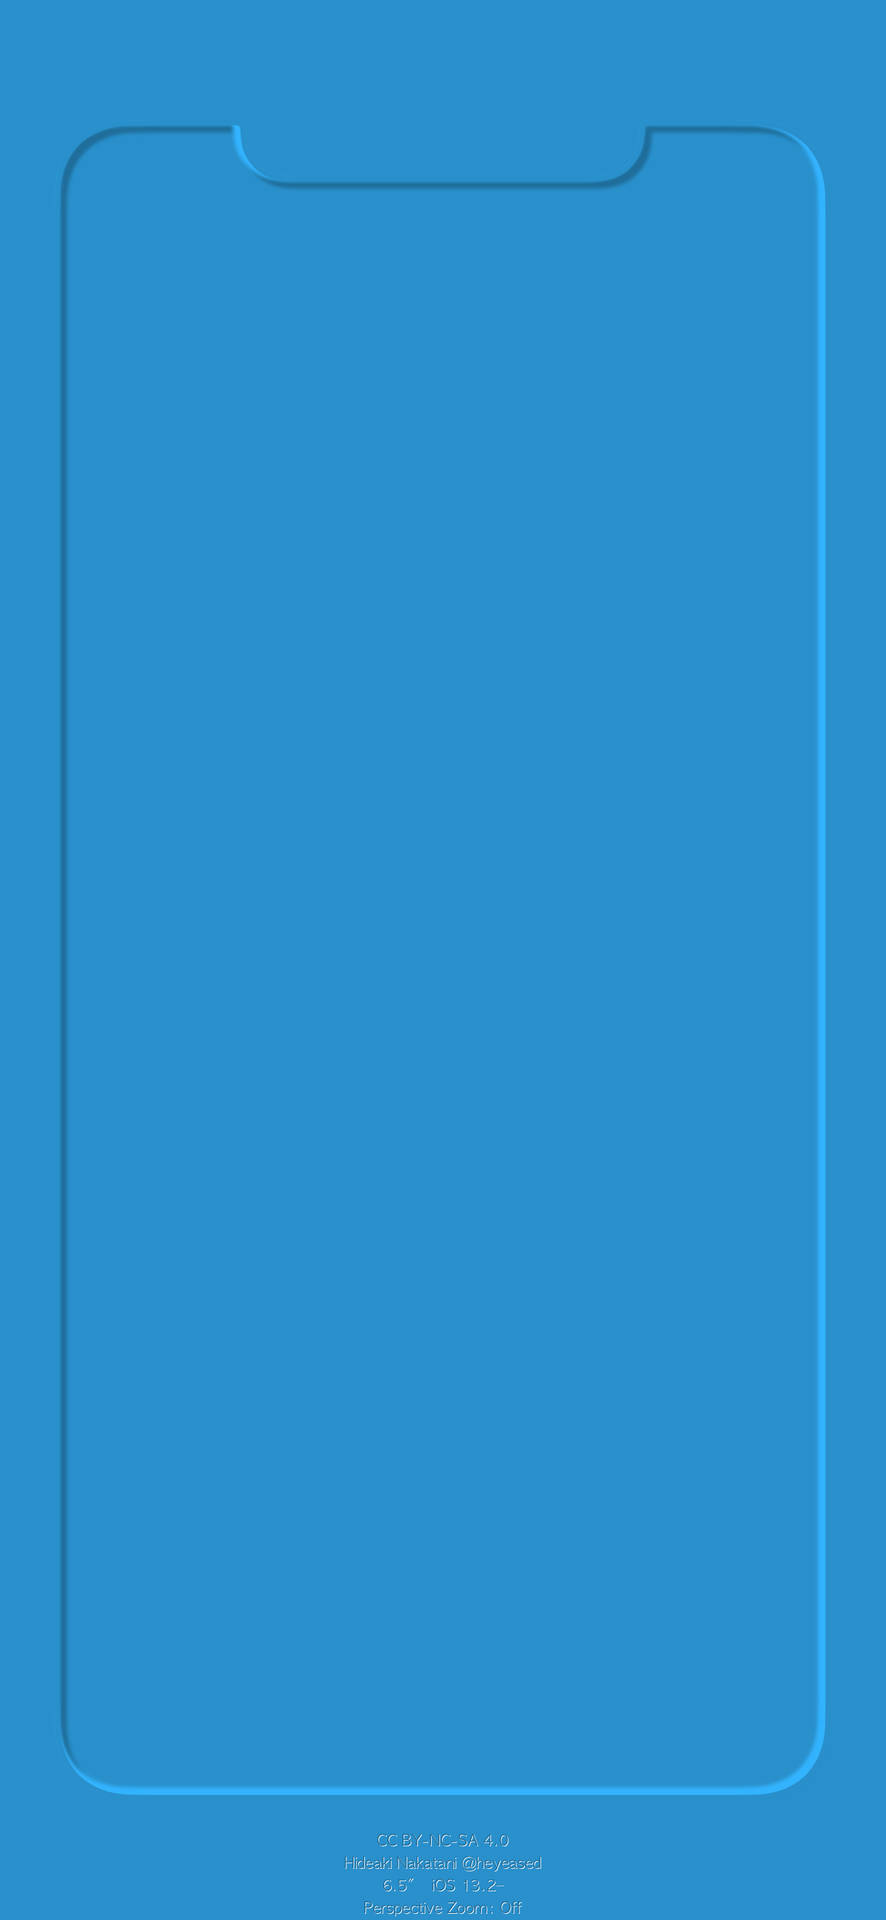 Uncuadrado Azul Con Fondo Blanco Fondo de pantalla